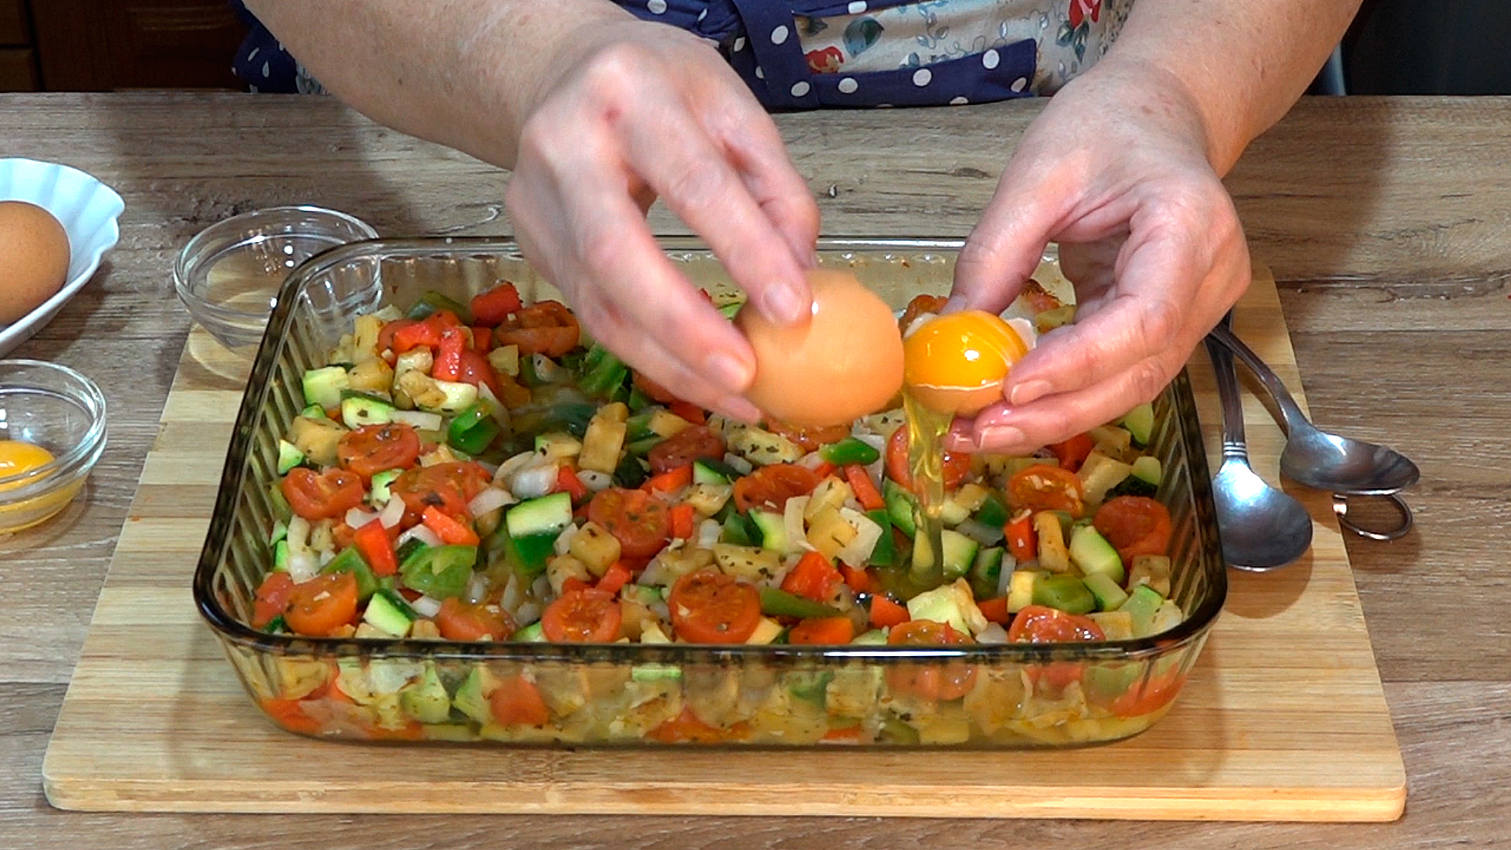 Verduras al horno con huevo poché, ¡por menos de 1 €!